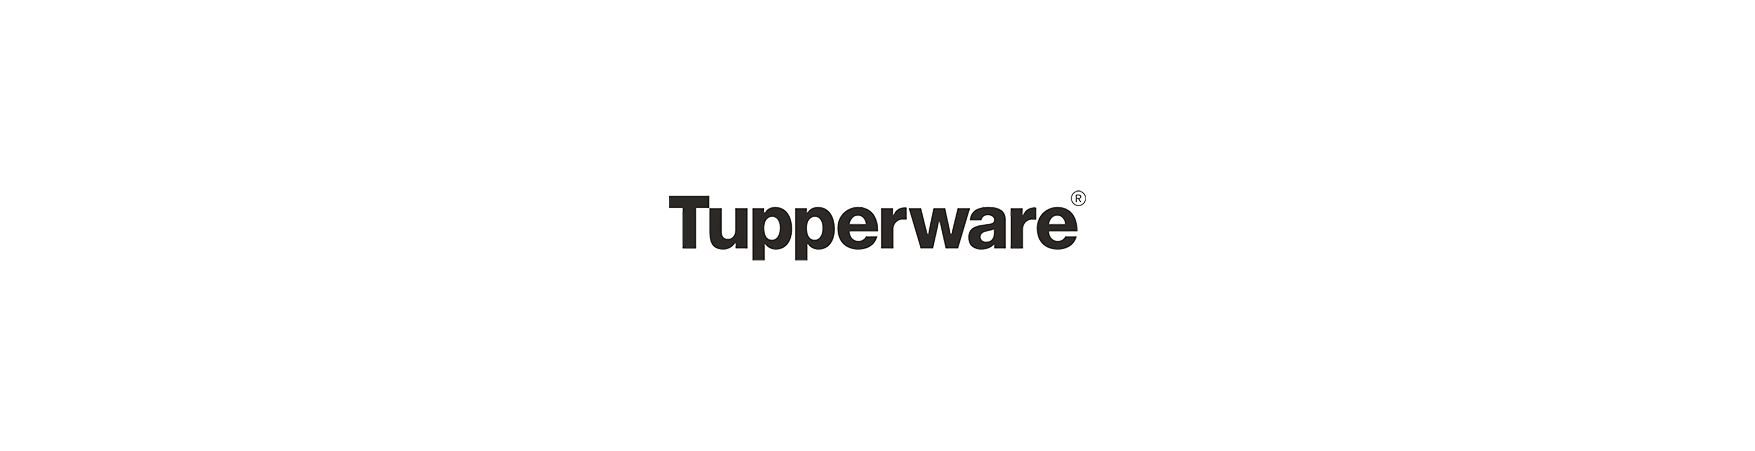 Tupperware®